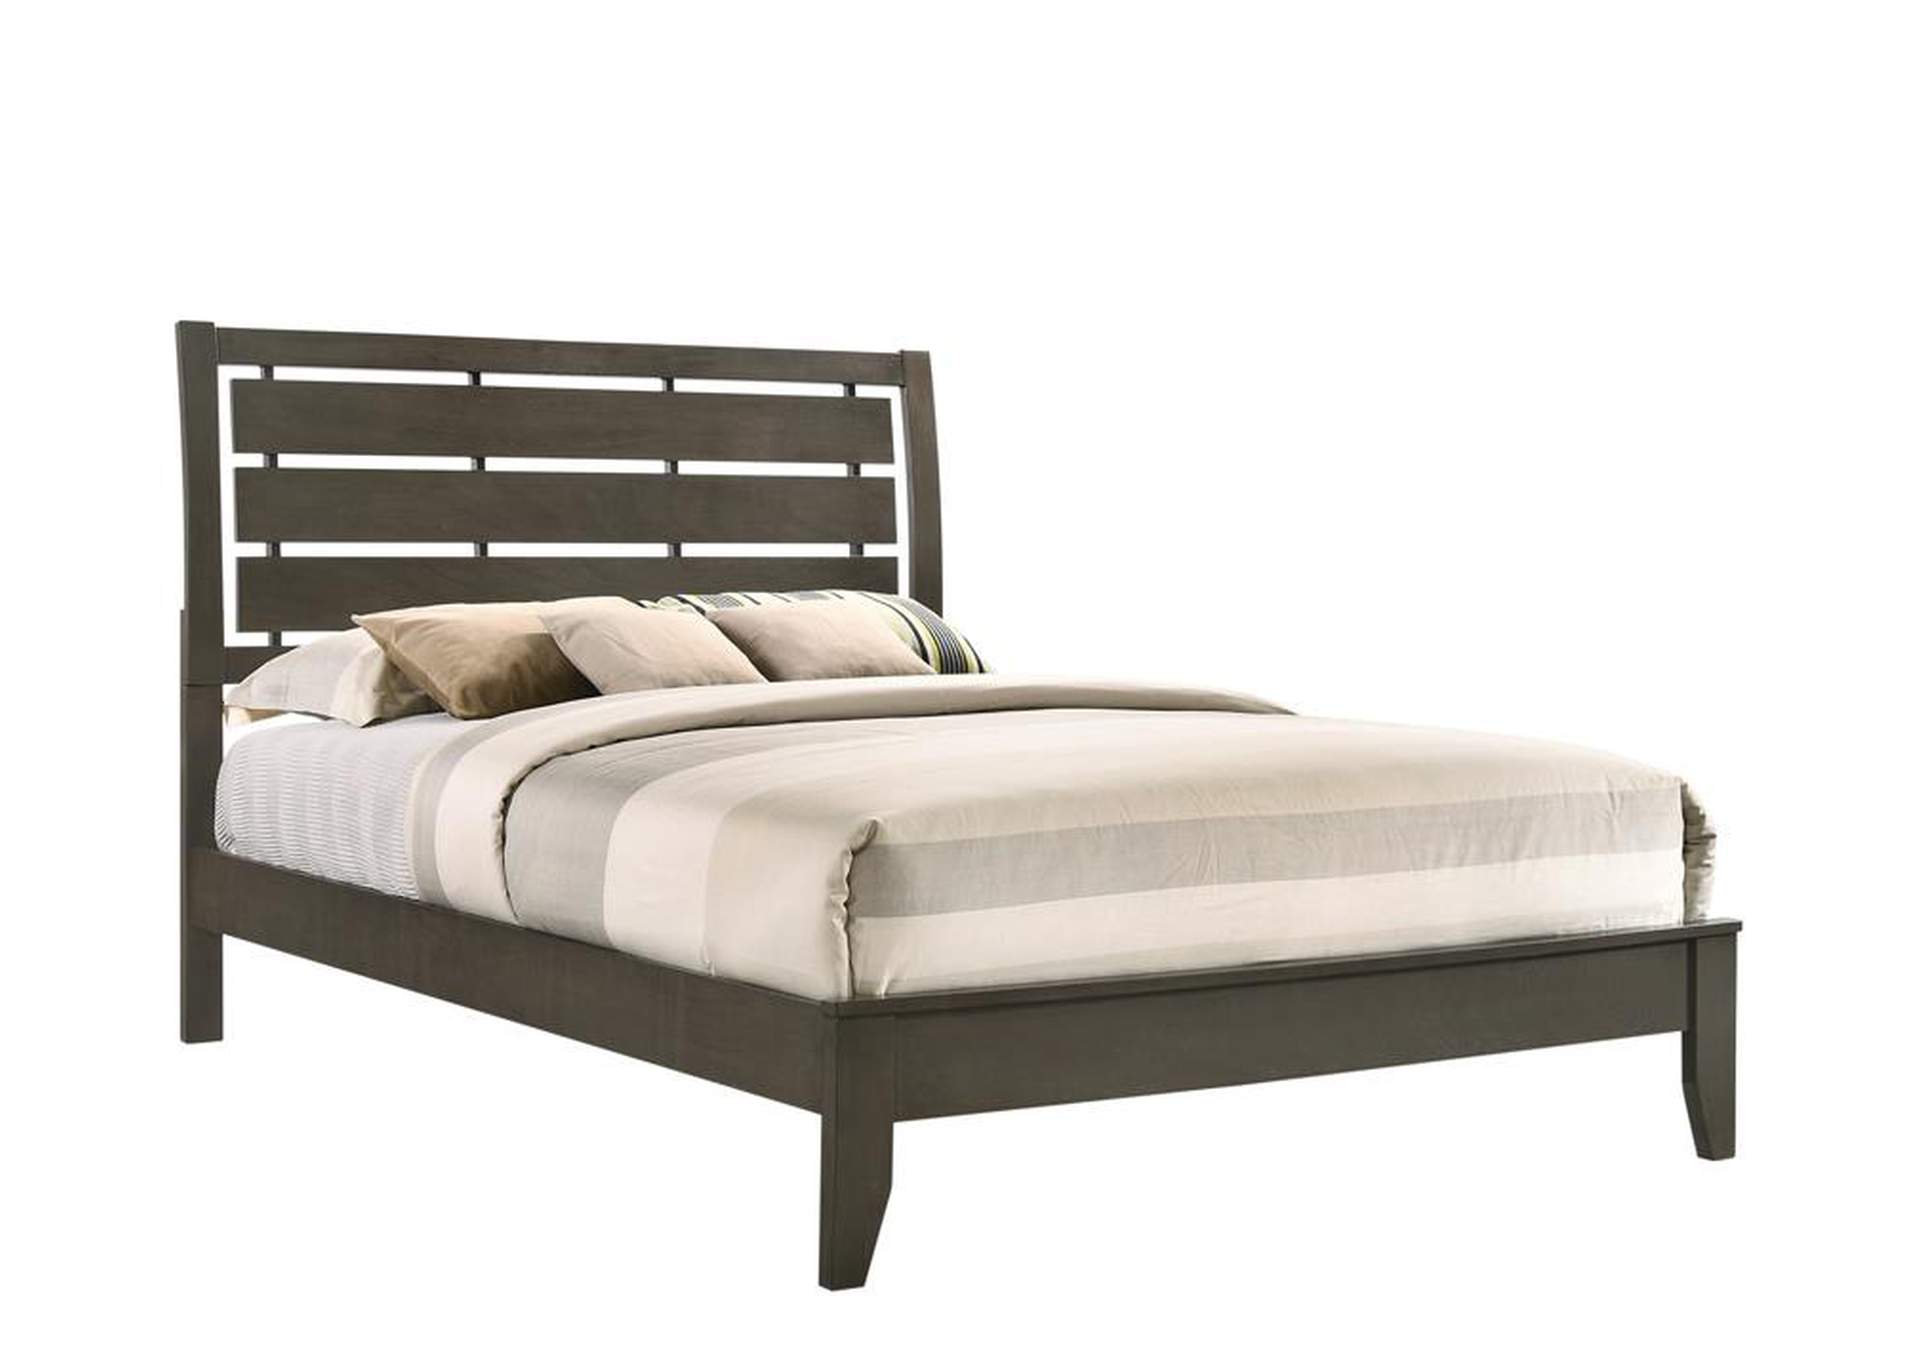 Eastern King Bed Best Furniture And, Eastern King Bed Frame